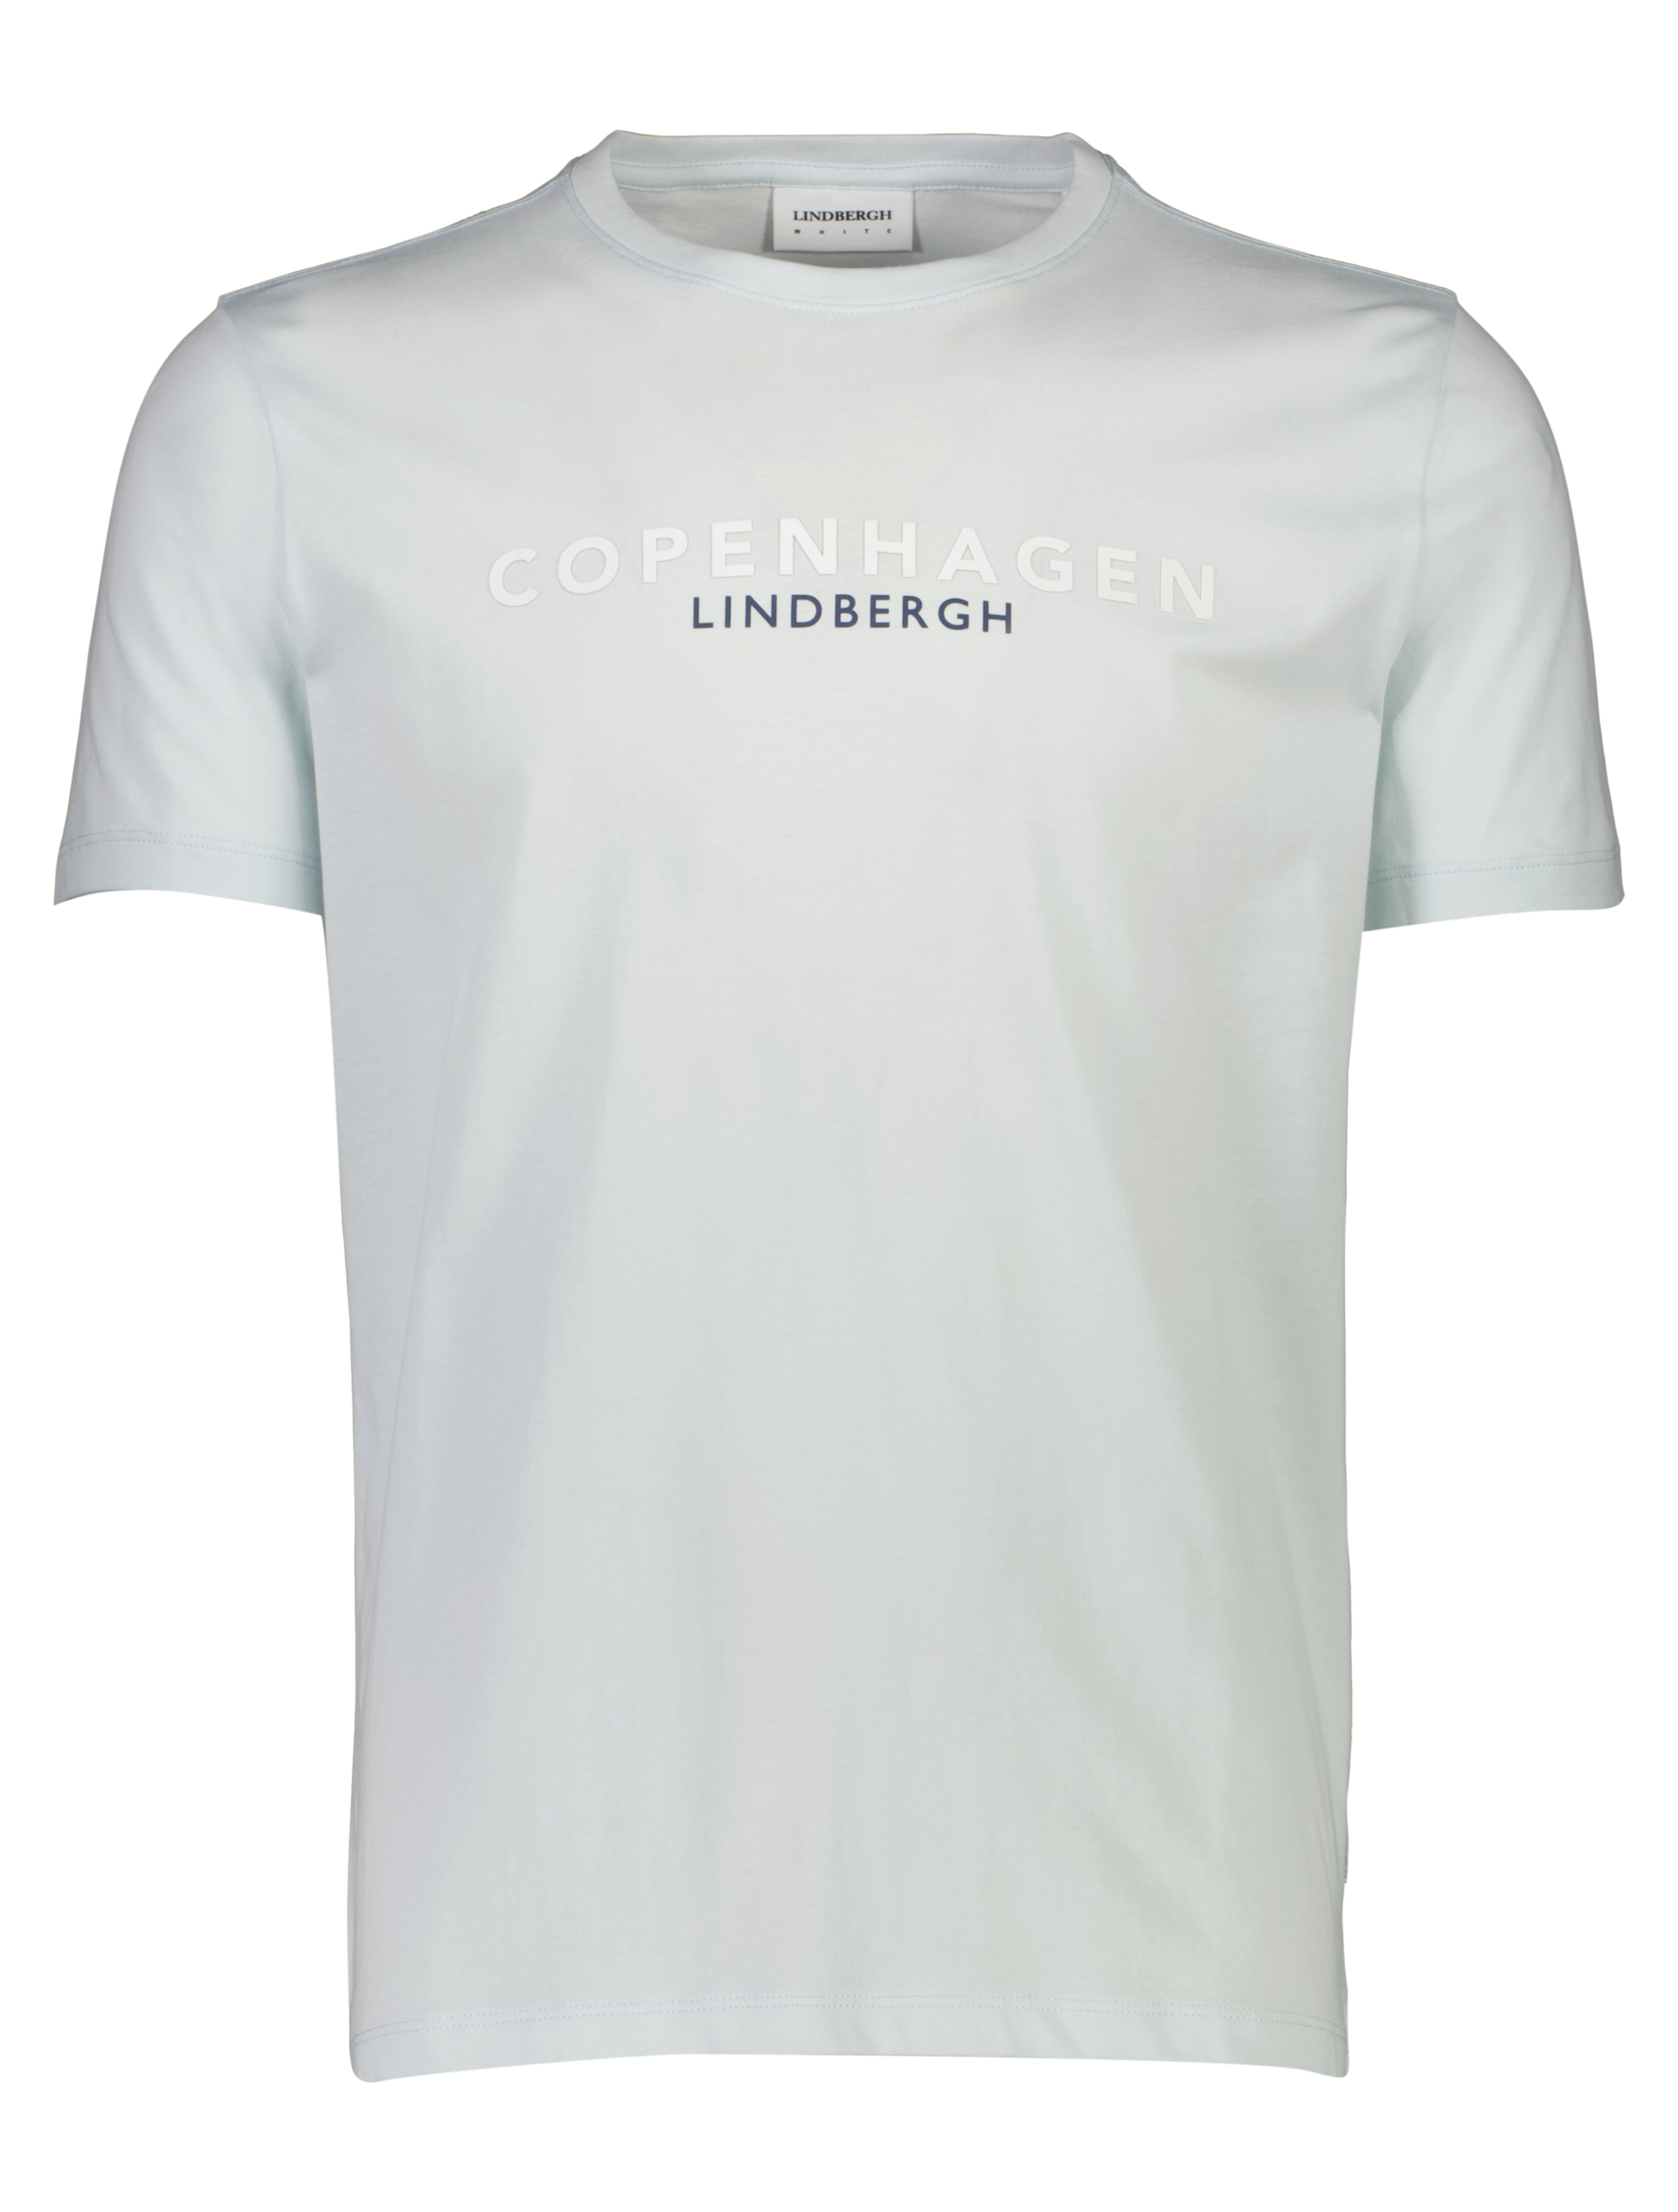 Lindbergh T-shirt blau / lt blue 224